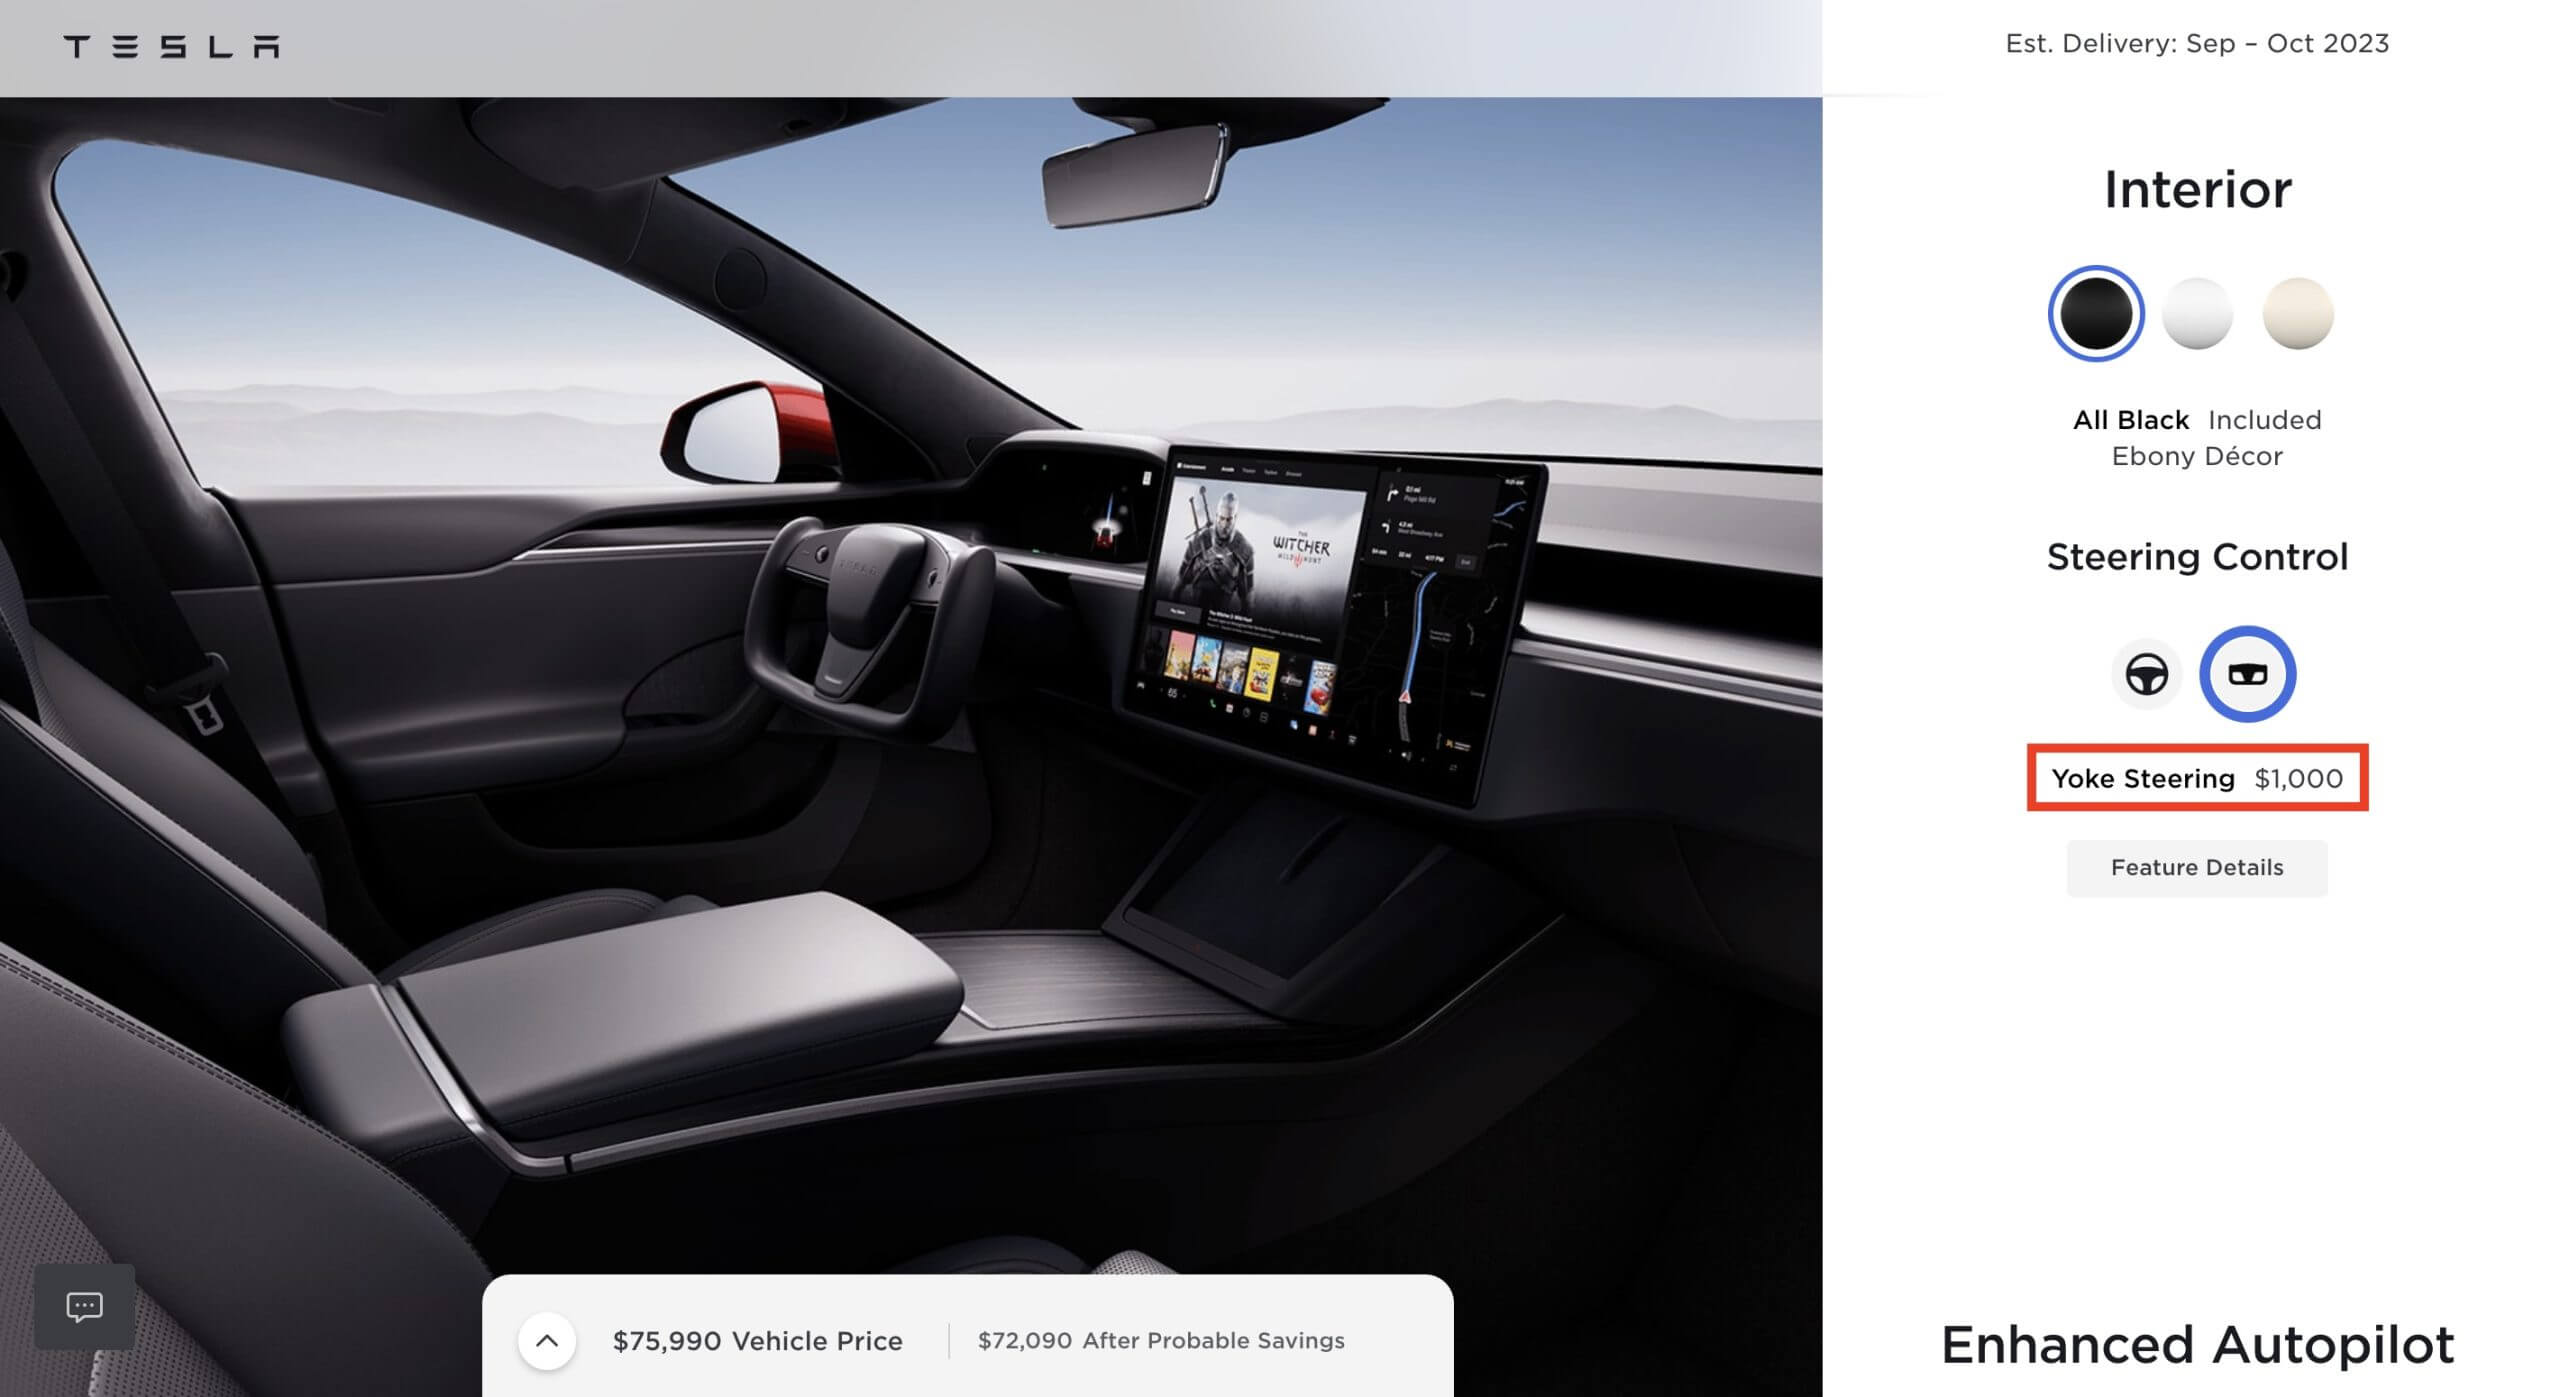 Tesla Model S 및 Model X 요크 스티어링, 이제 1,000달러 옵션 제공